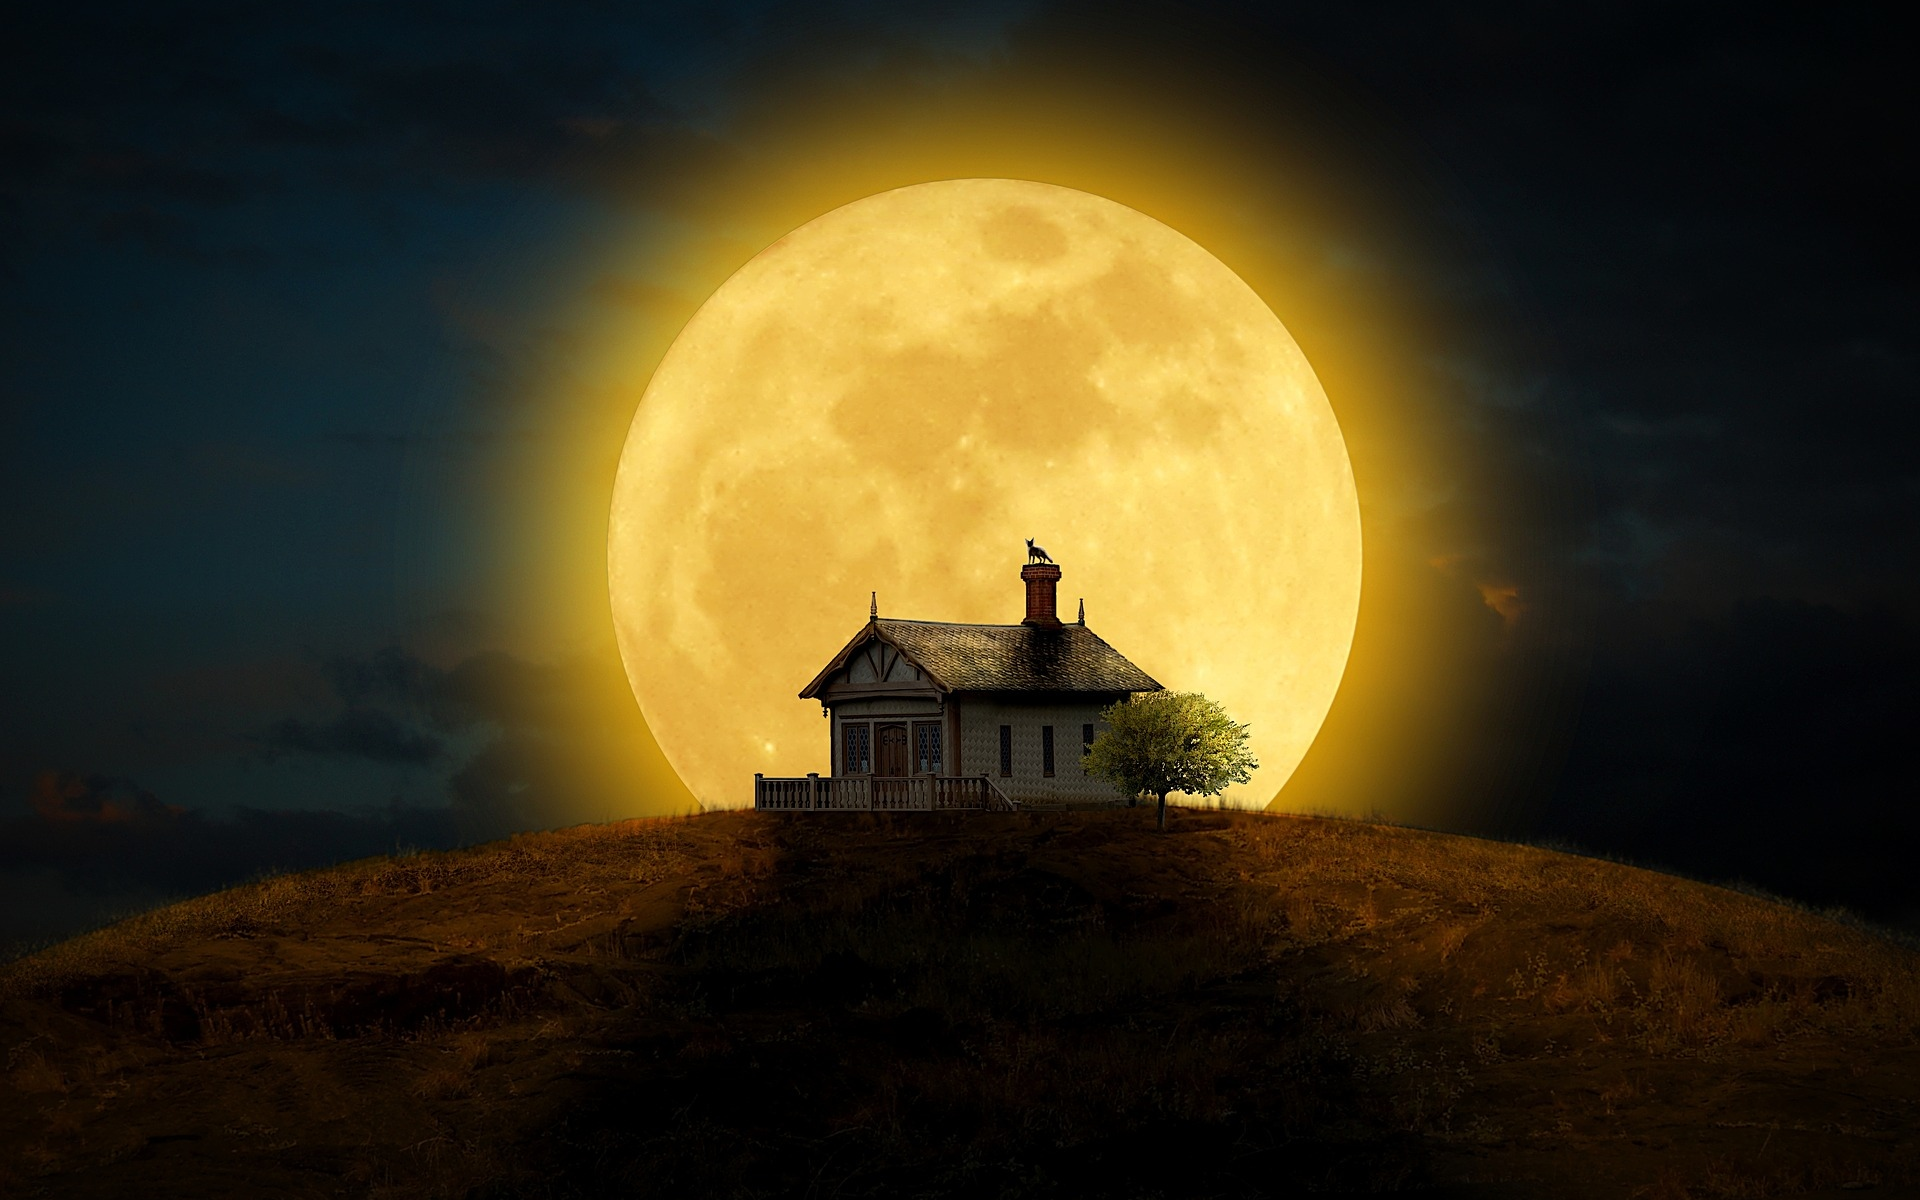 дом, ночь, луна, кошка